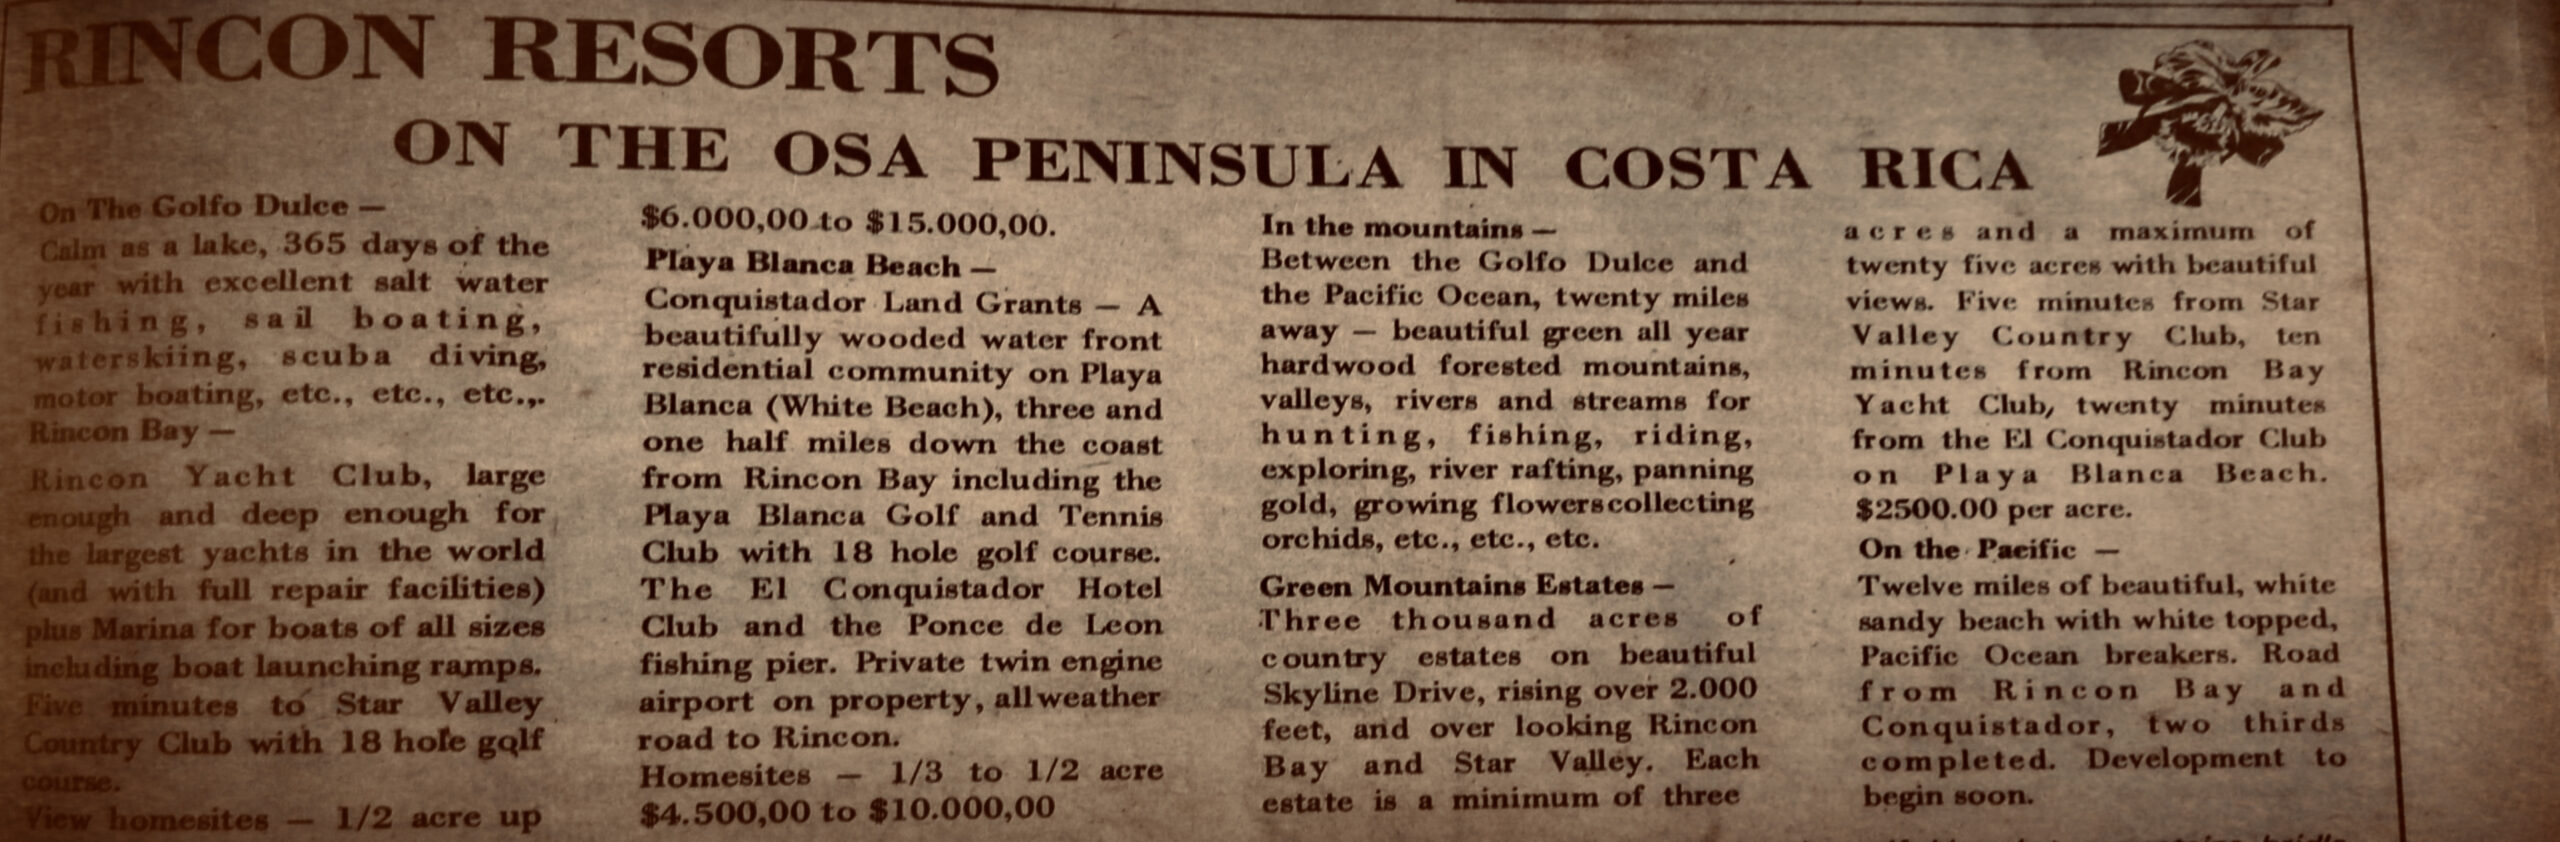 History Osa Peninsula 1970s